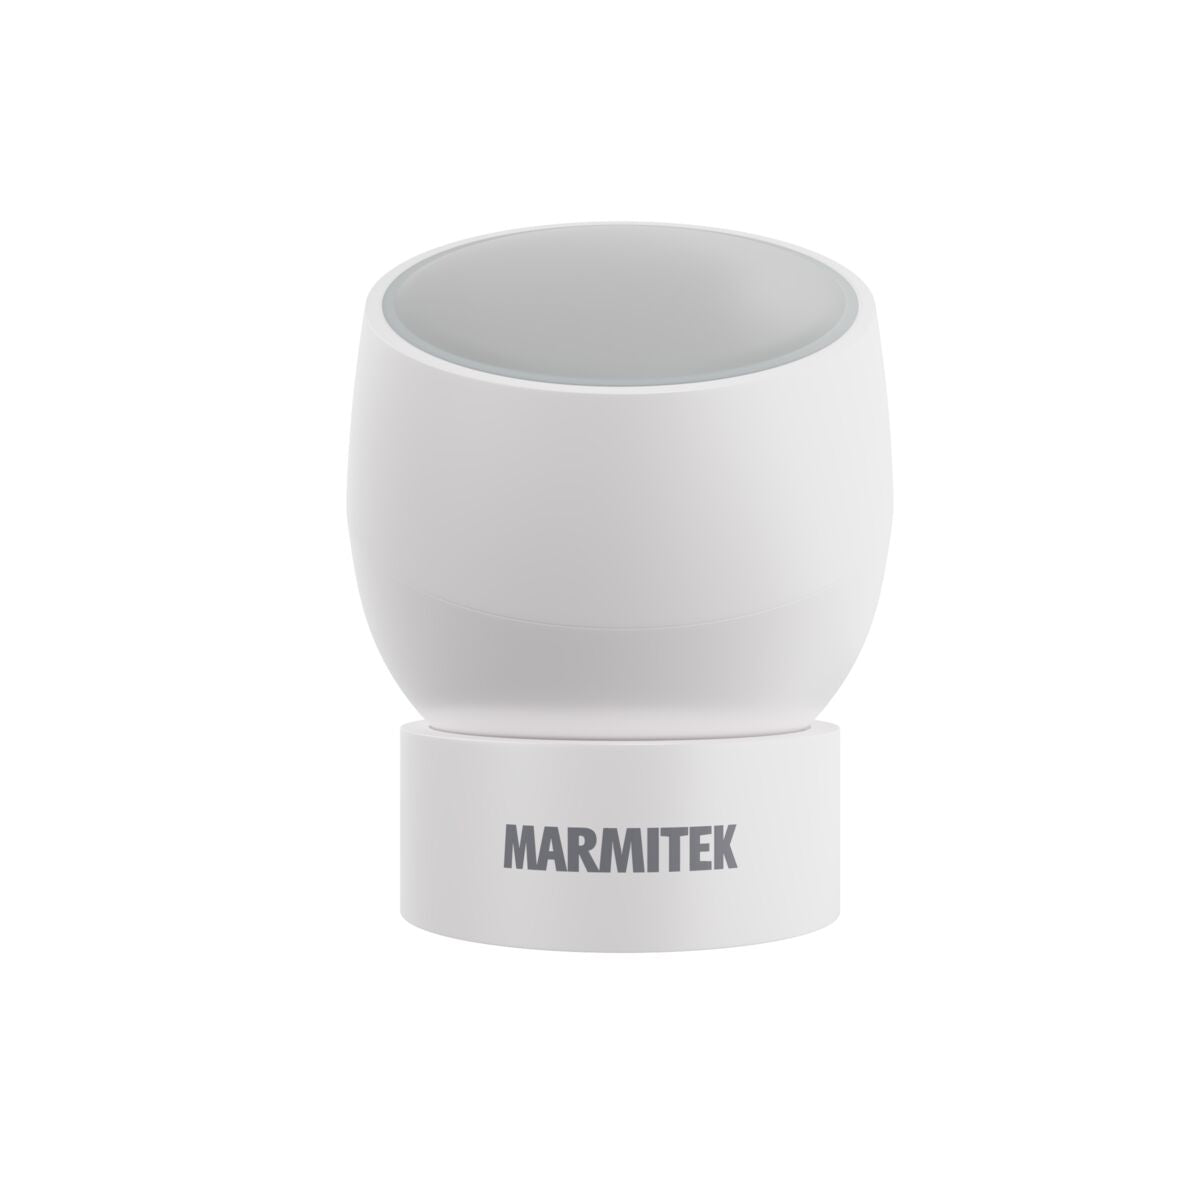 Sense ME - Zigbee motion sensor - Product Image with sensor facing upwards | Marmitek